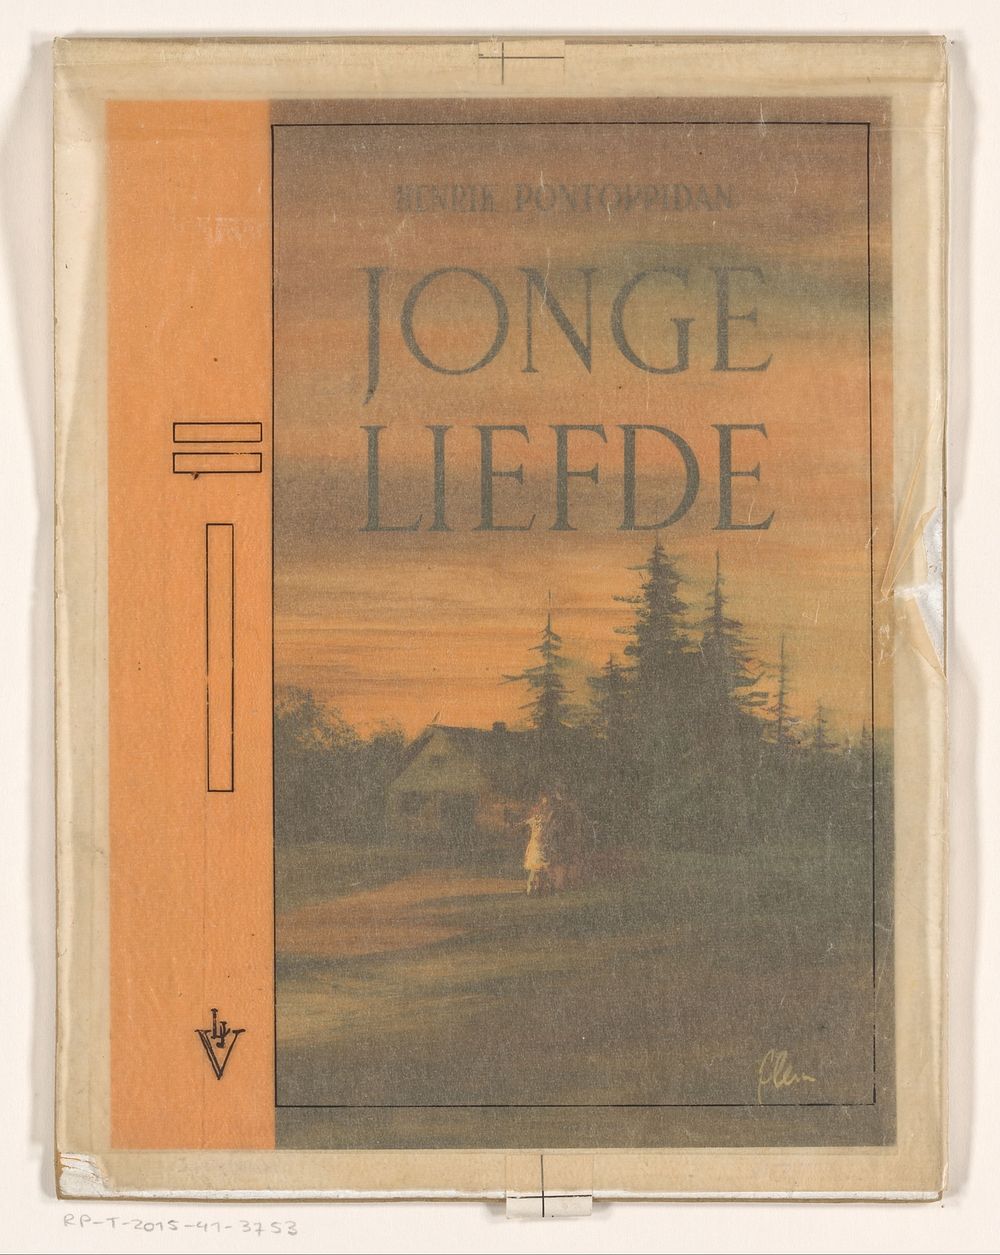 Bandontwerp voor: Hendrik Pontoppidan, Jonge liefde (Ung Elskov en Minder), 1947 (in or before 1947) by Studio Flem